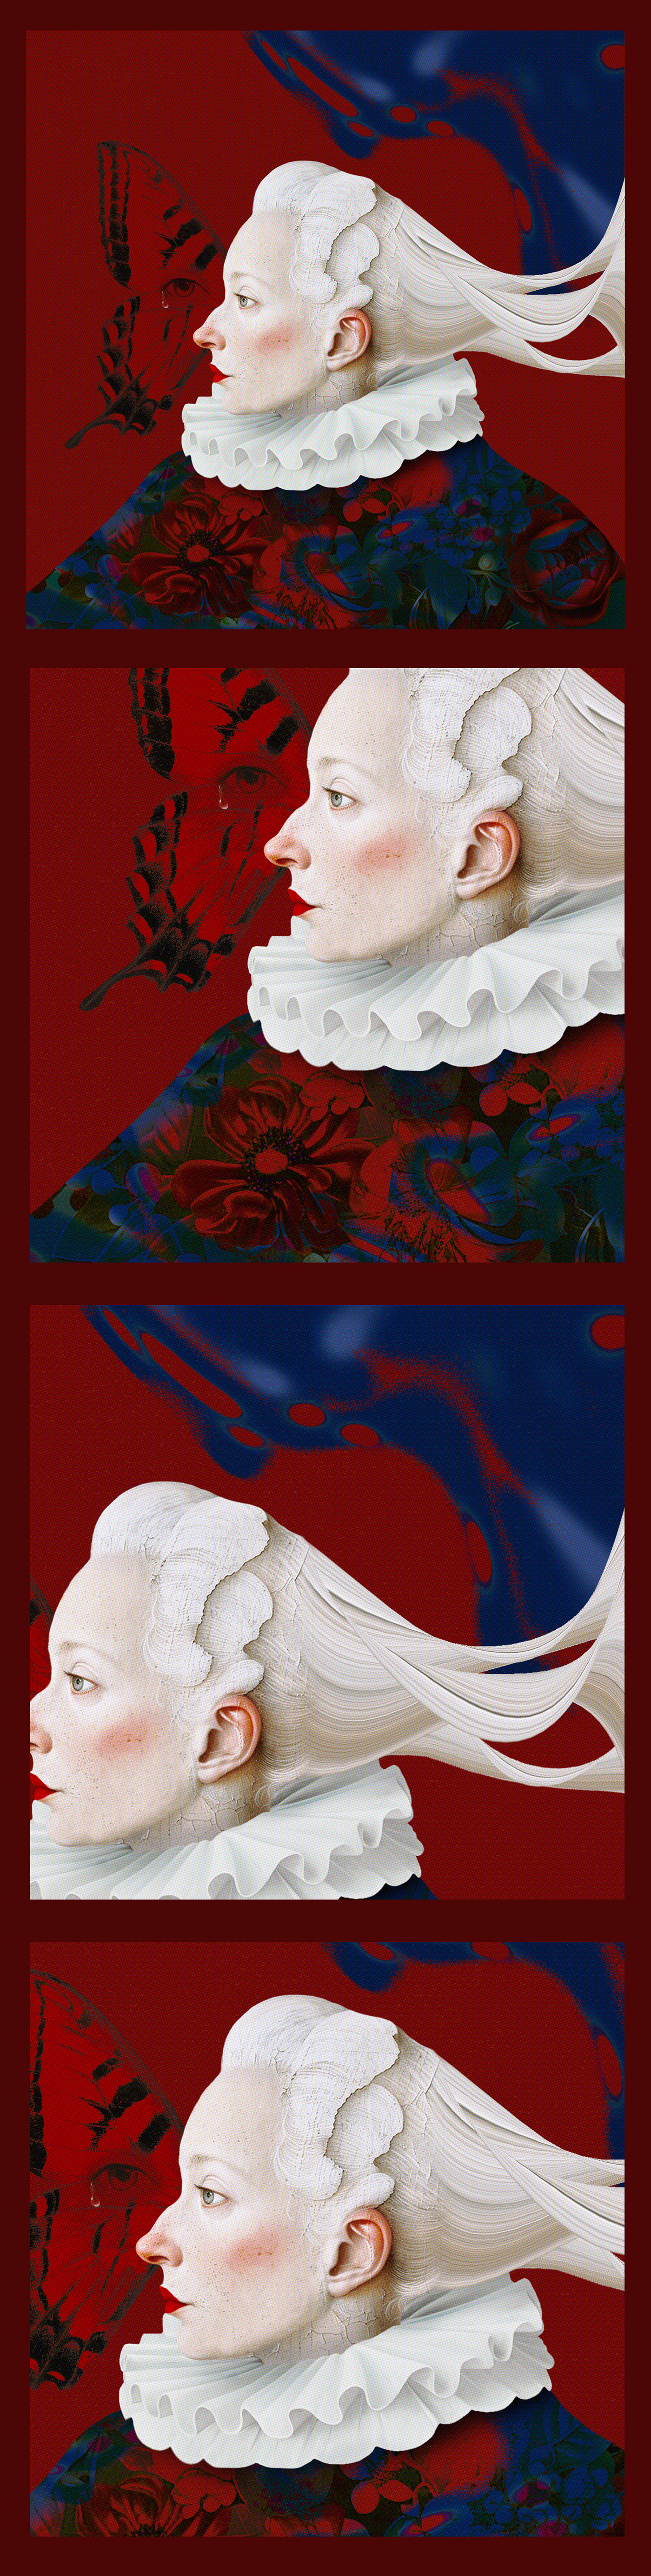 collage collage art Digital Art  art direction  graphic design  ILLUSTRATION  surrealism Renaissance art art artwork